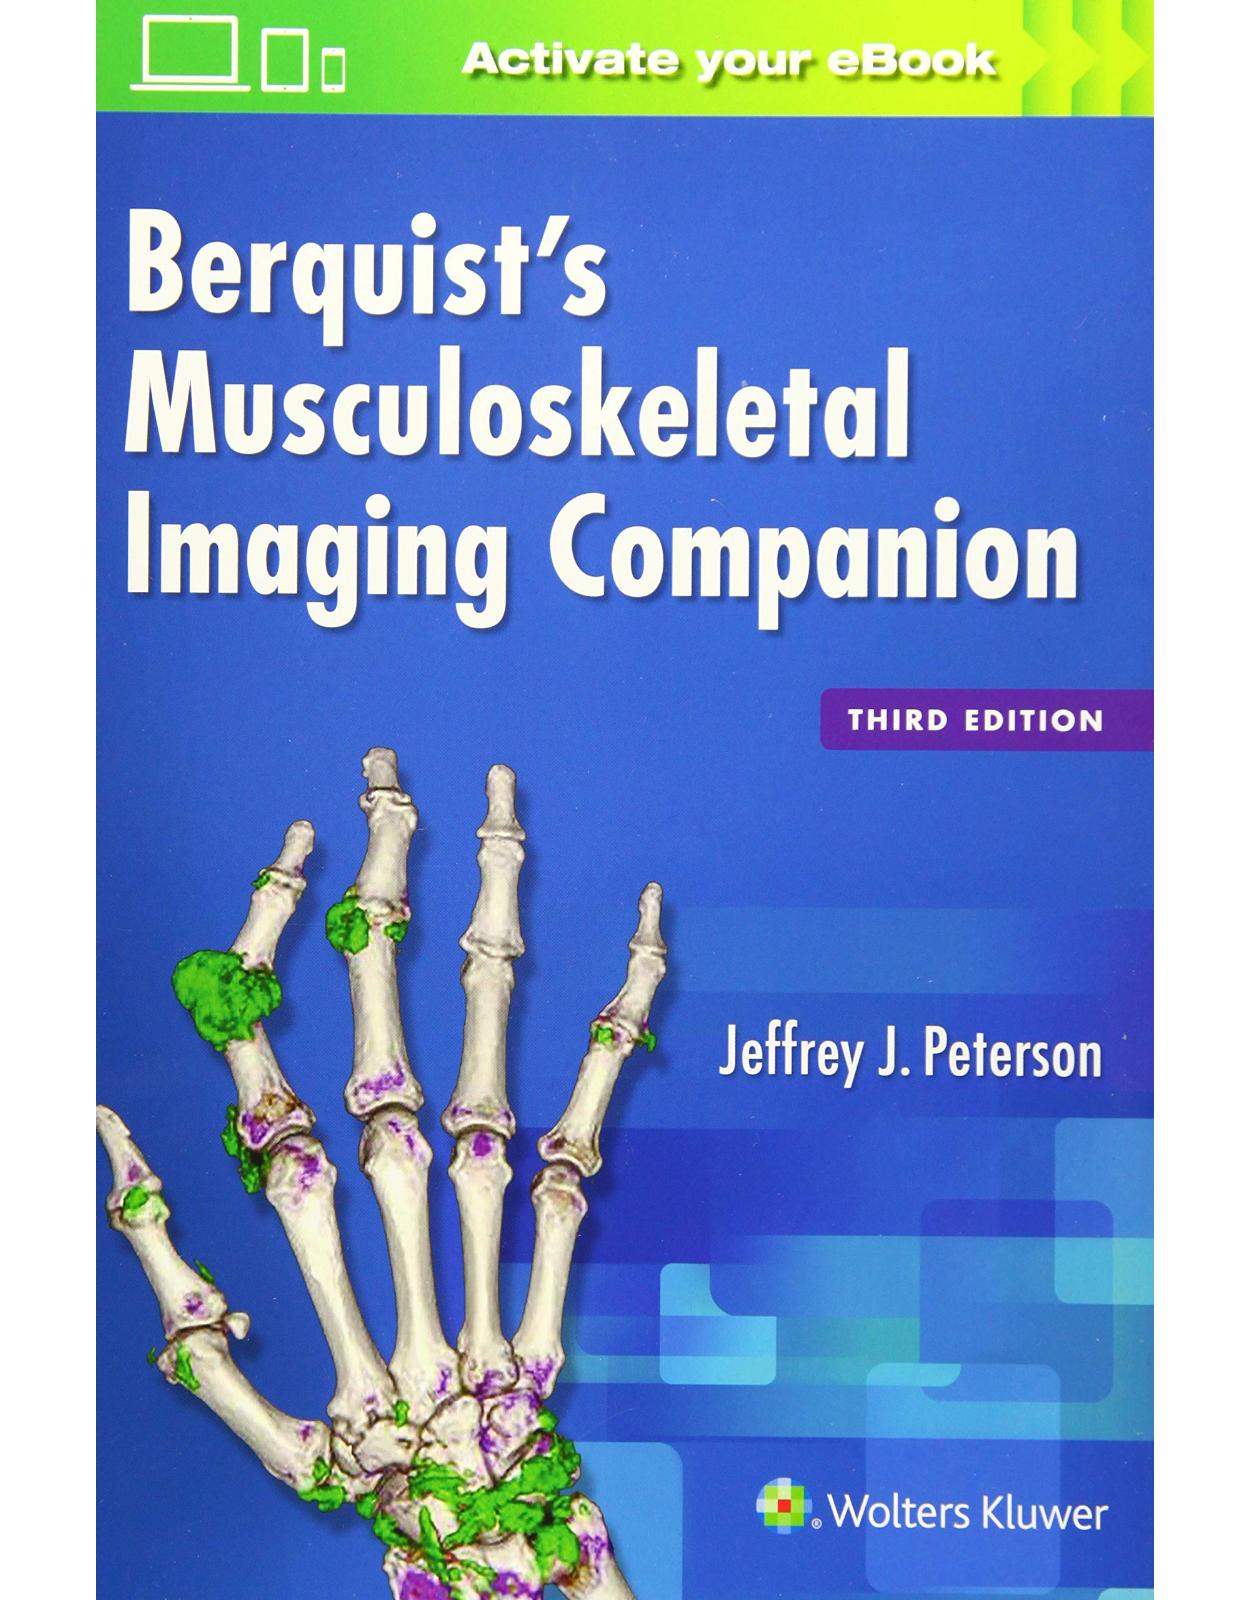 Berquist’s Musculoskeletal Imaging Companion